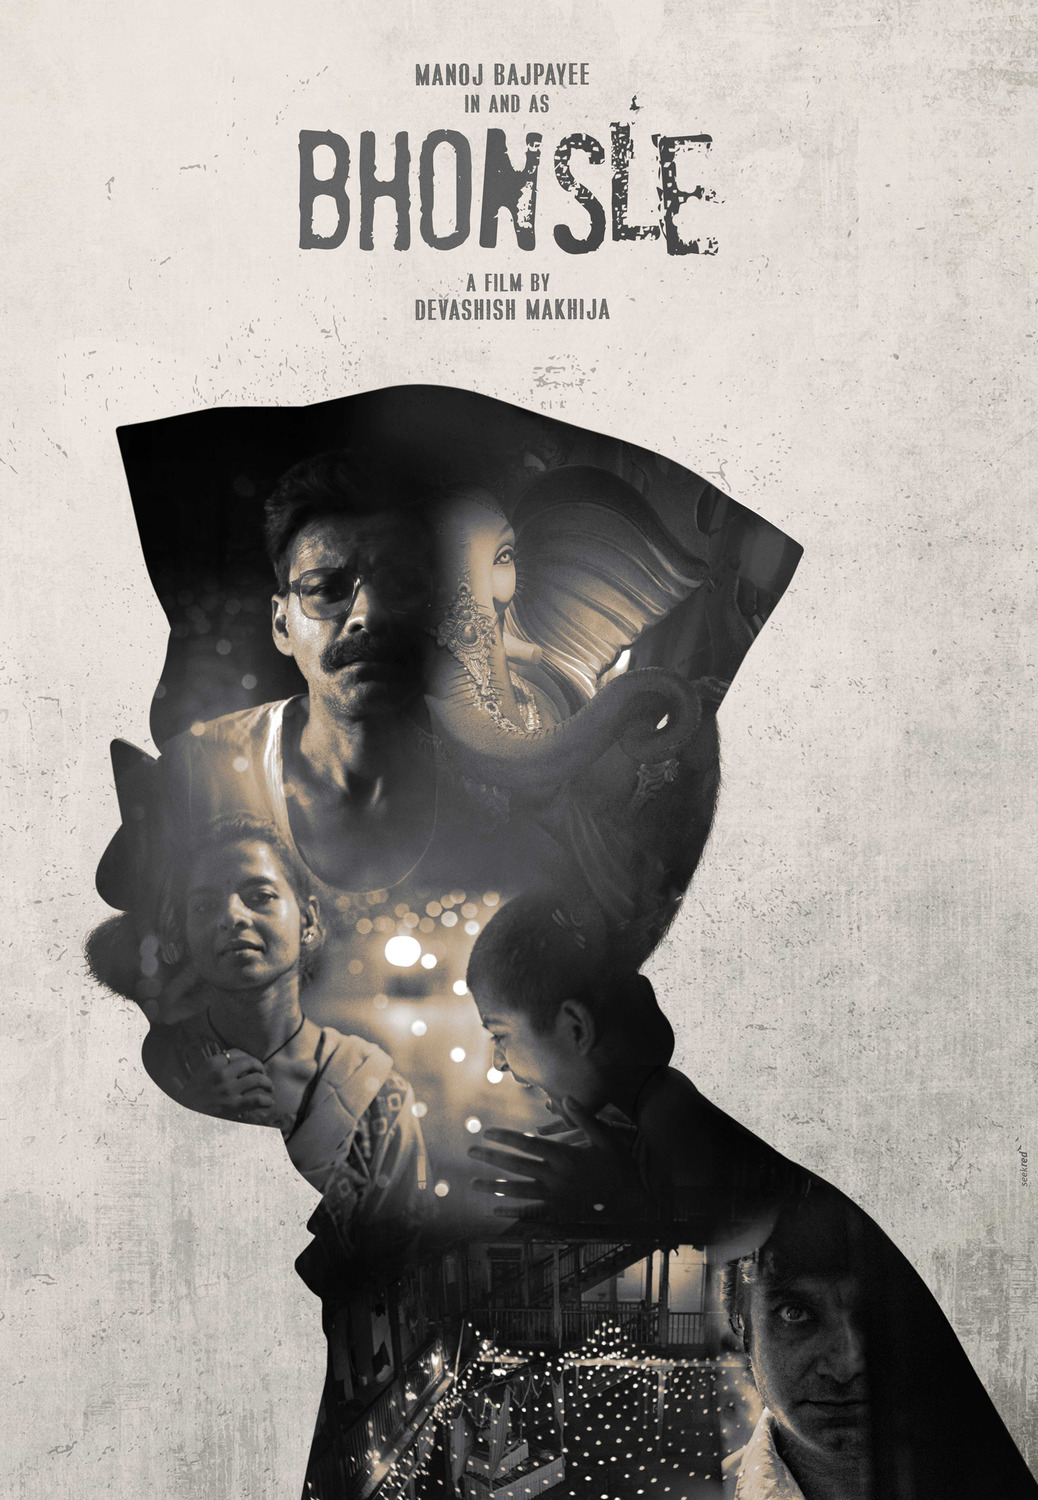 Extra Large Movie Poster Image for Bhonsle 